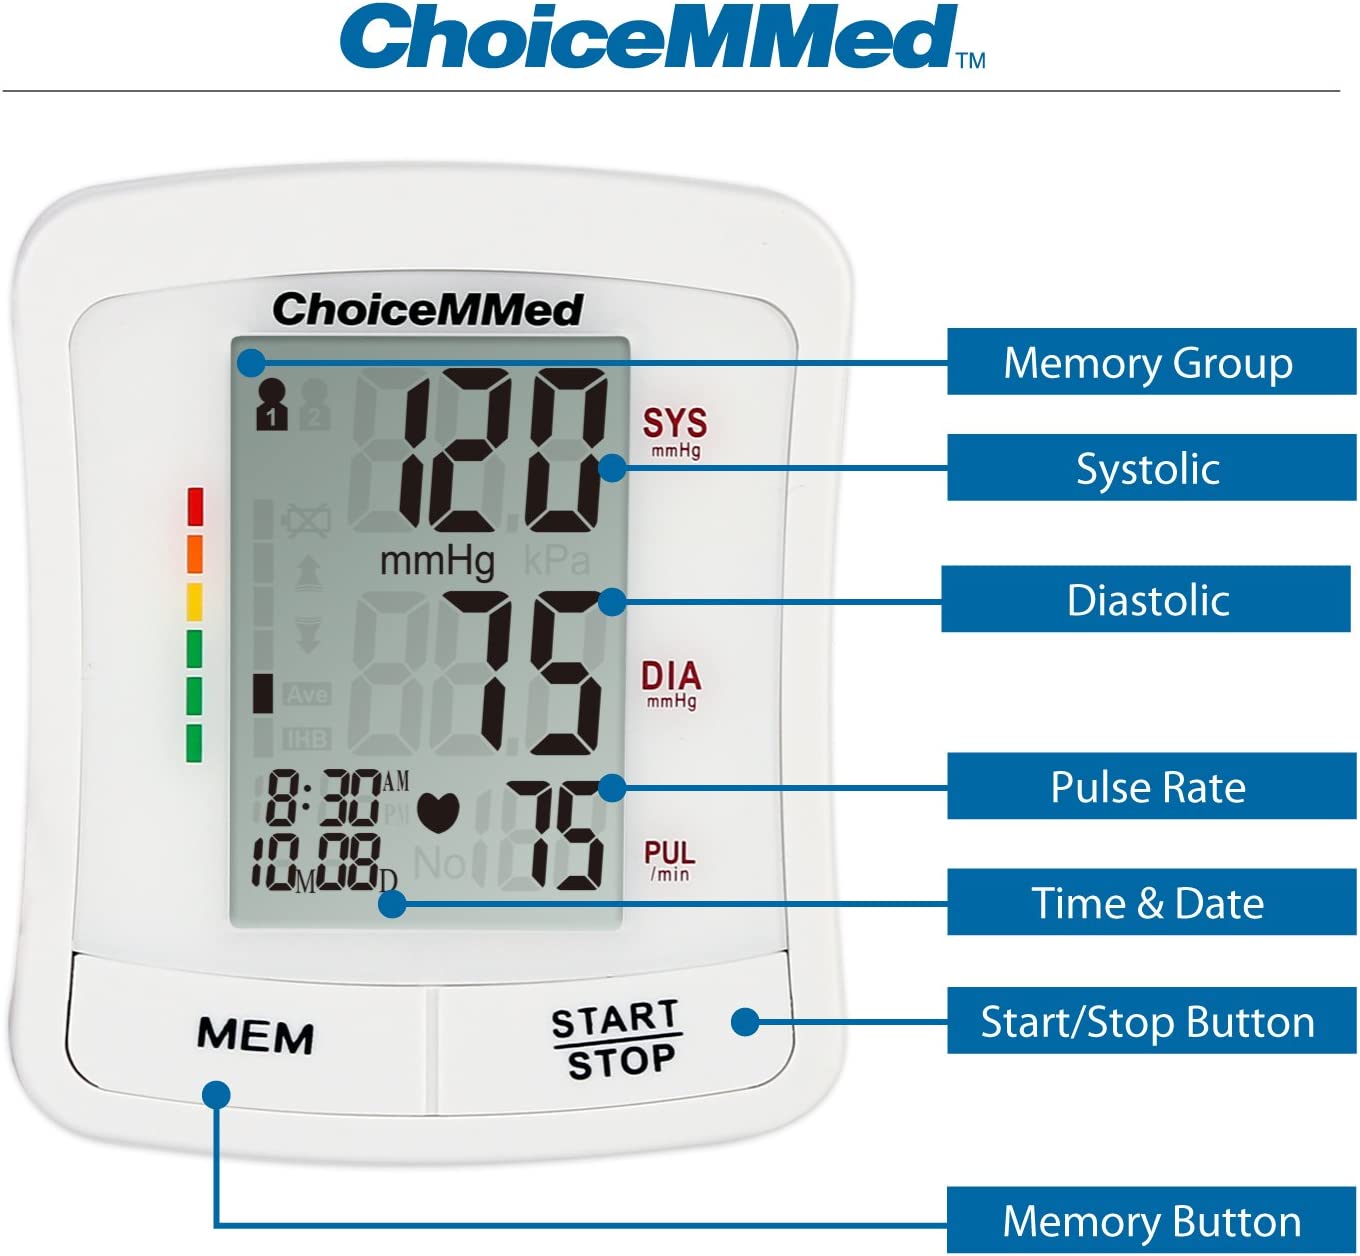 Automatic Wrist Blood Pressure Monitor BP Cuff Gauge Machine Tester For Home